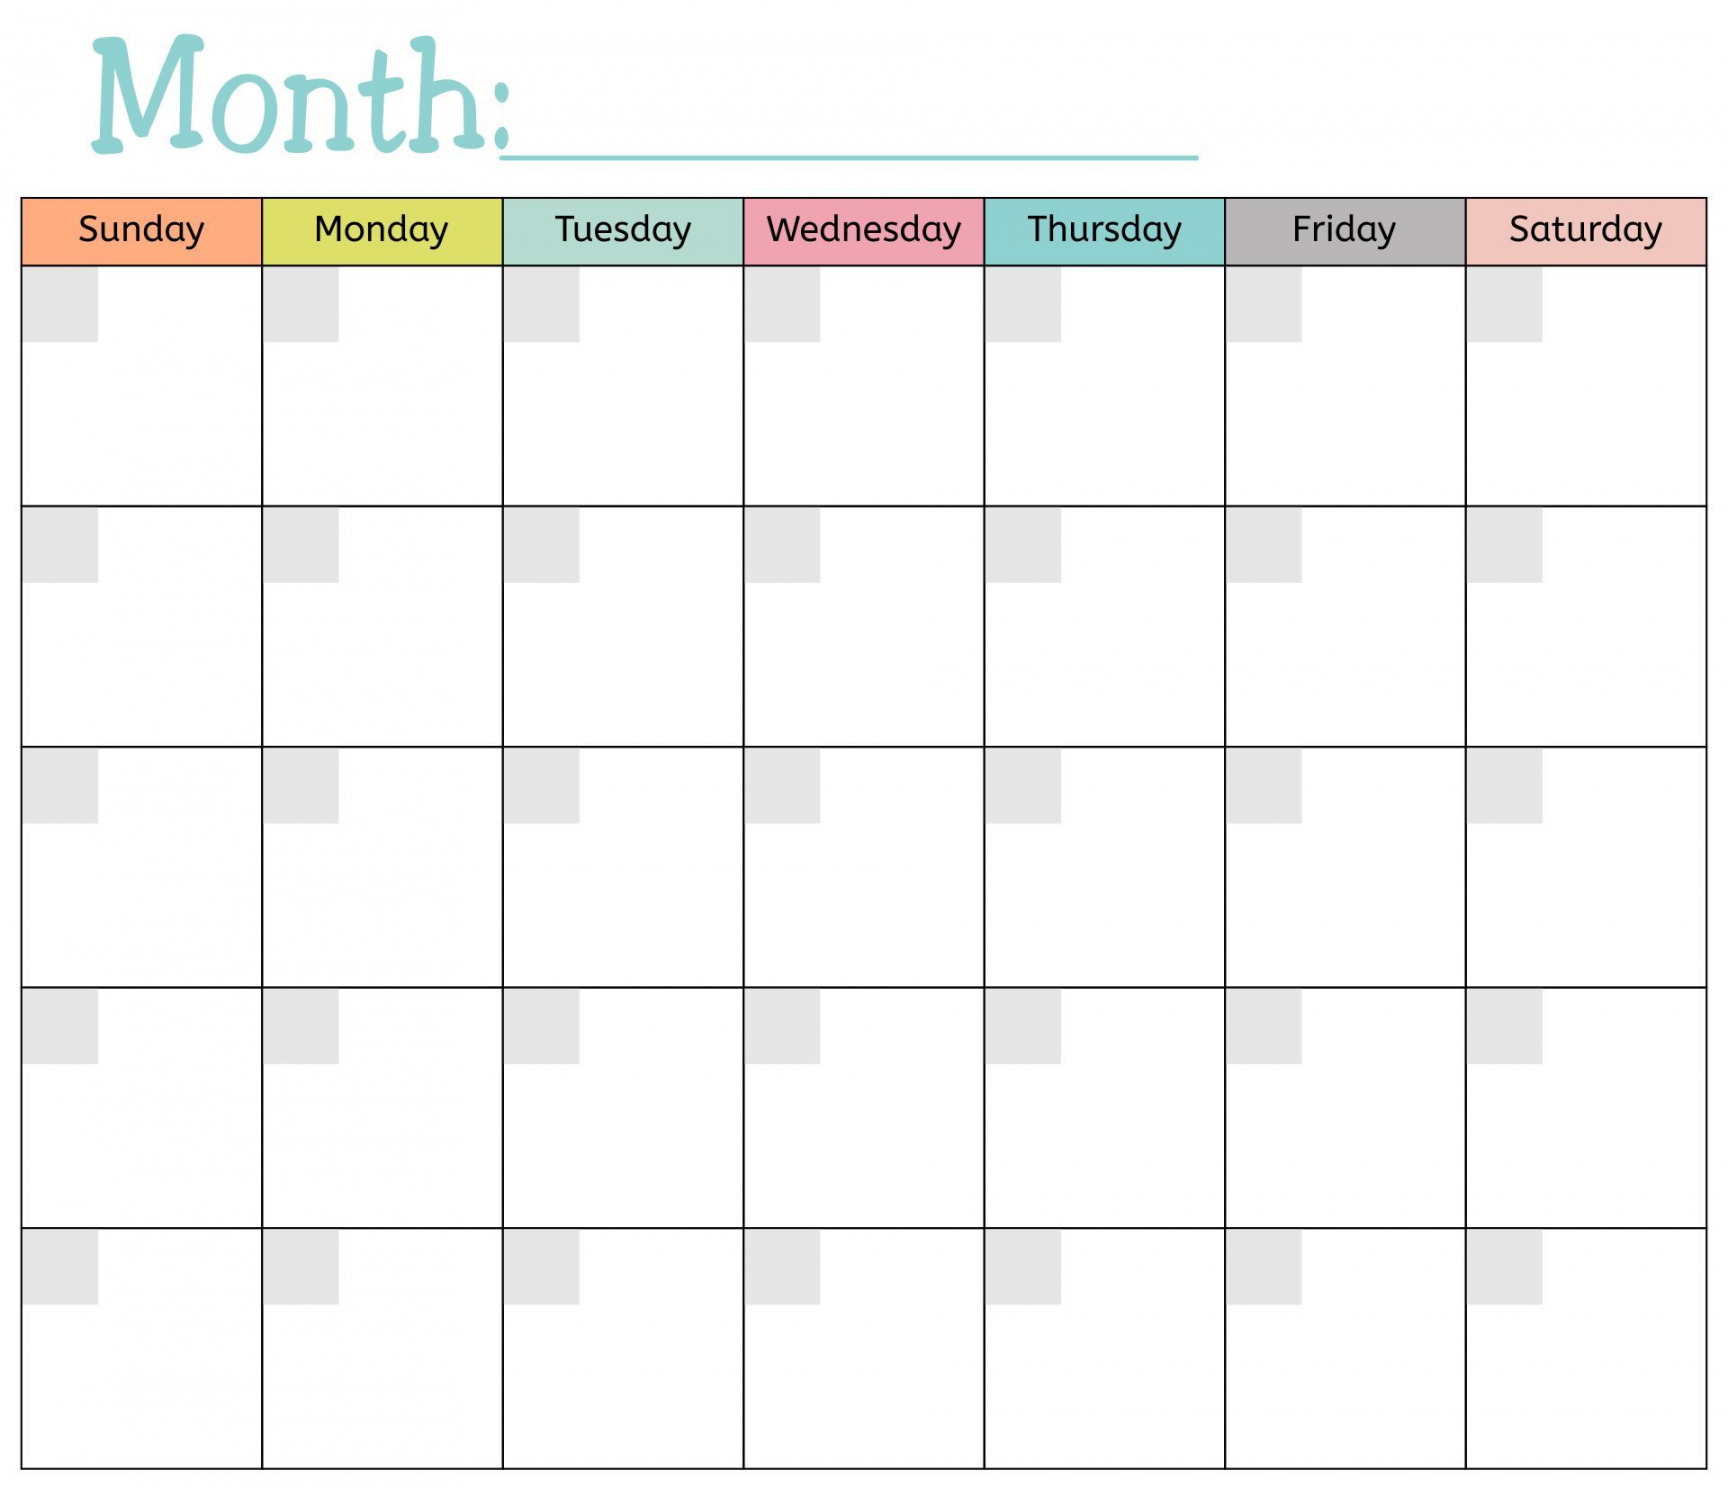 Free Printable Blank Monthly Calendar - Printable - Blank Monthly Calendar Printable Free  Blank monthly calendar